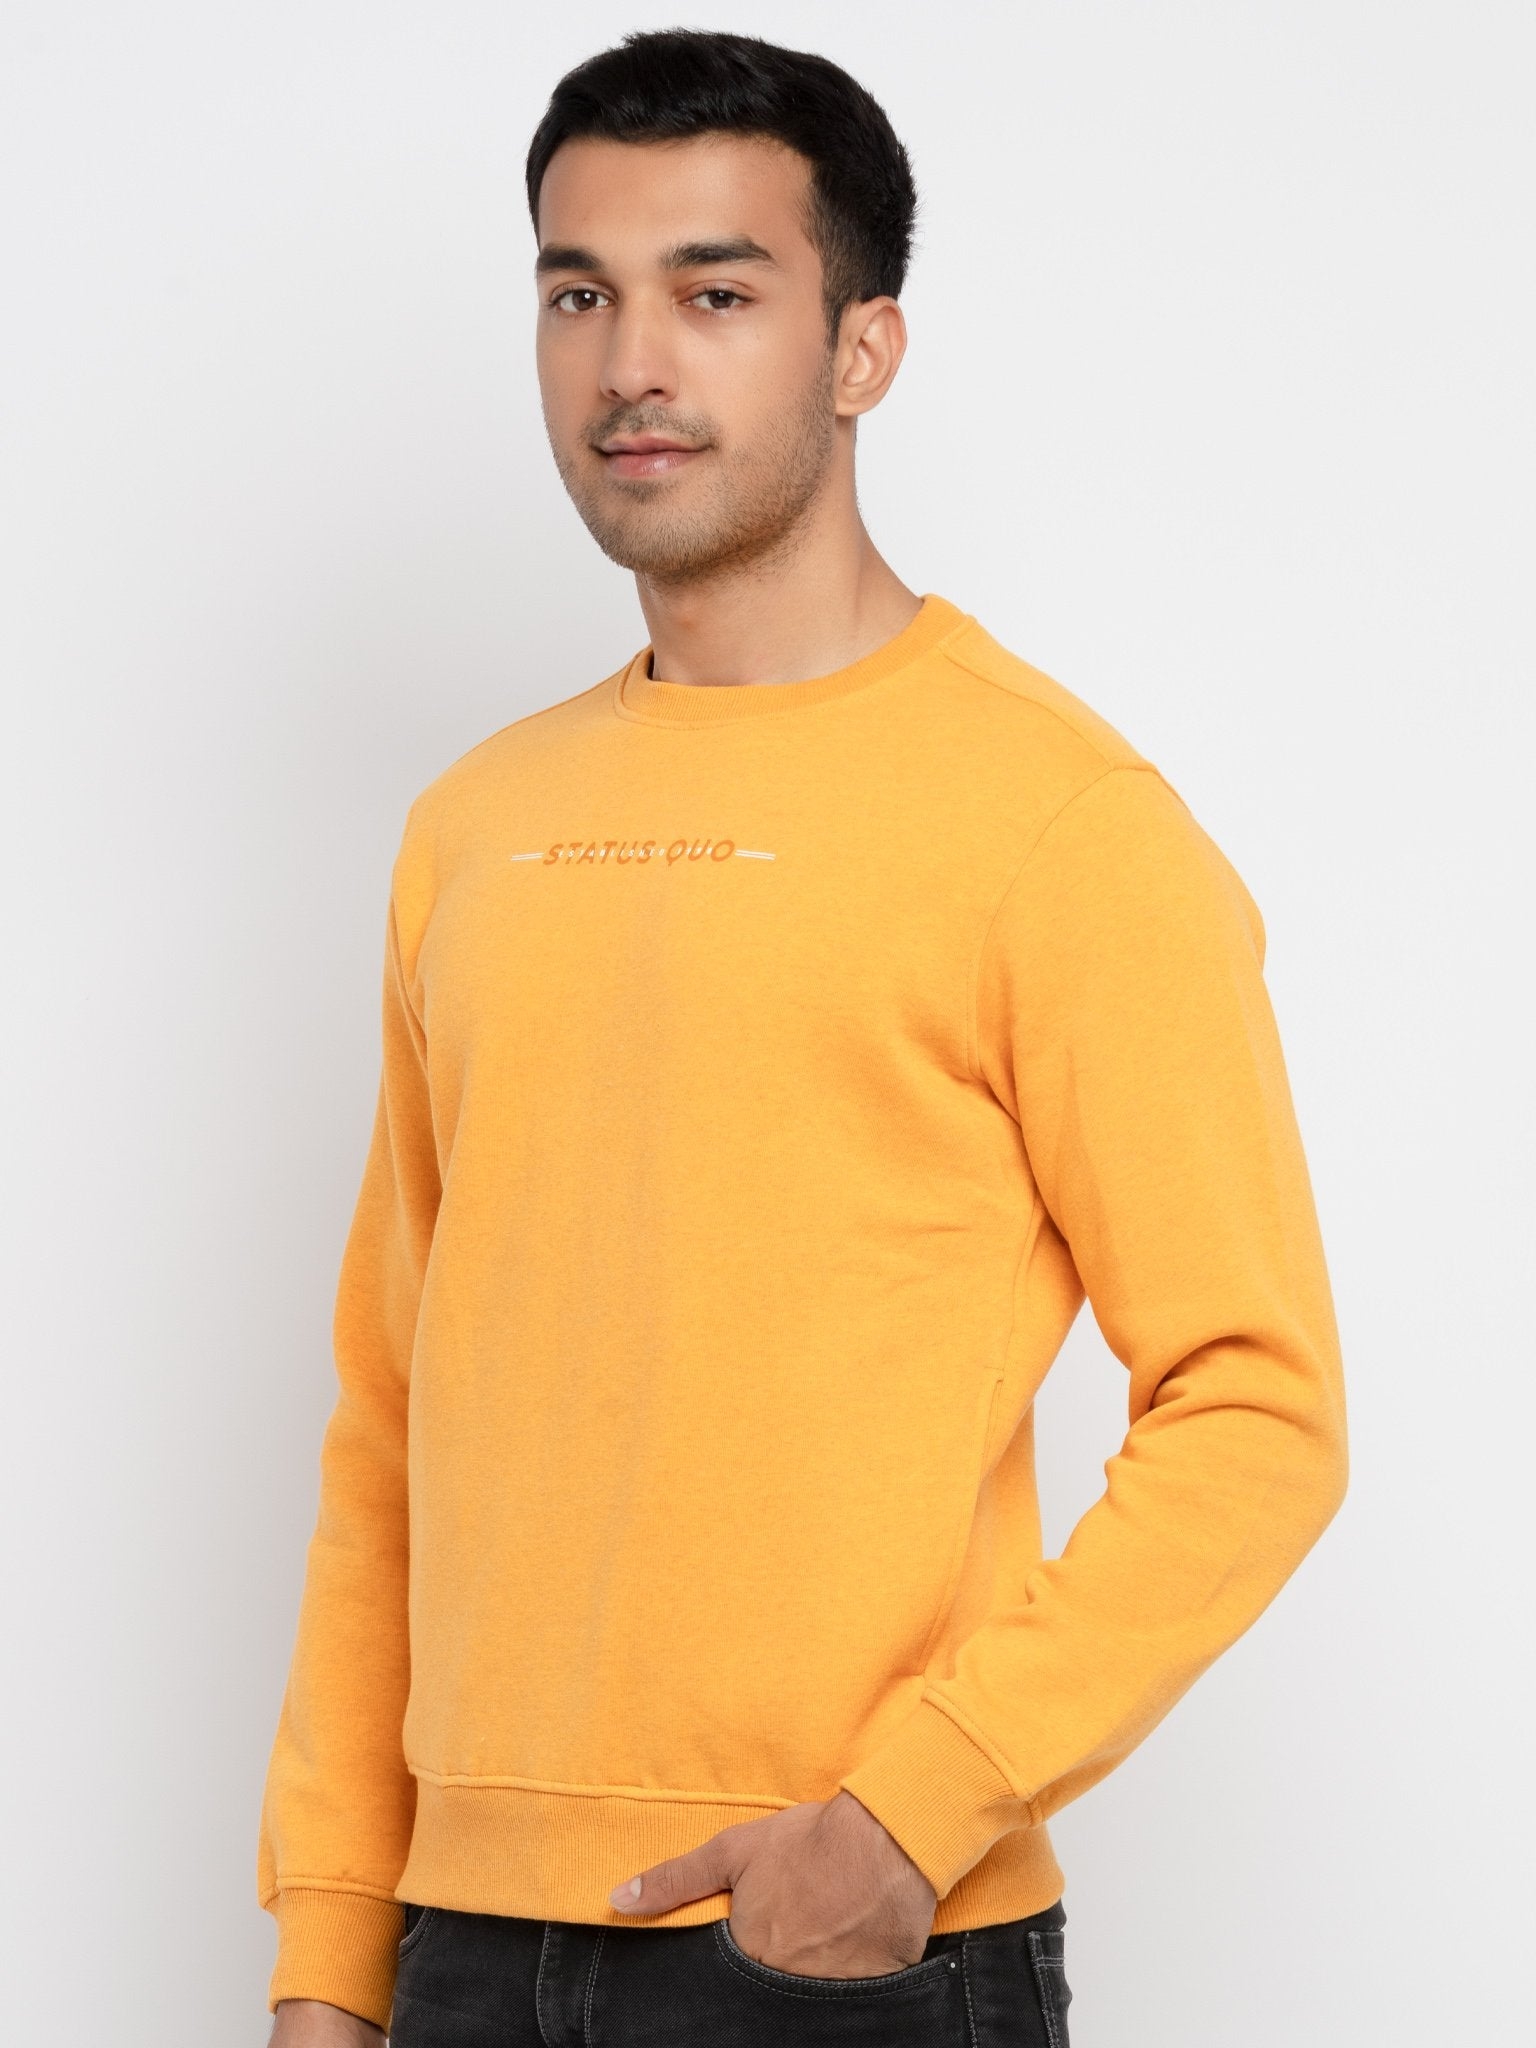 Status Quo | Men's Yellow Polycotton Printed Sweatshirts 4